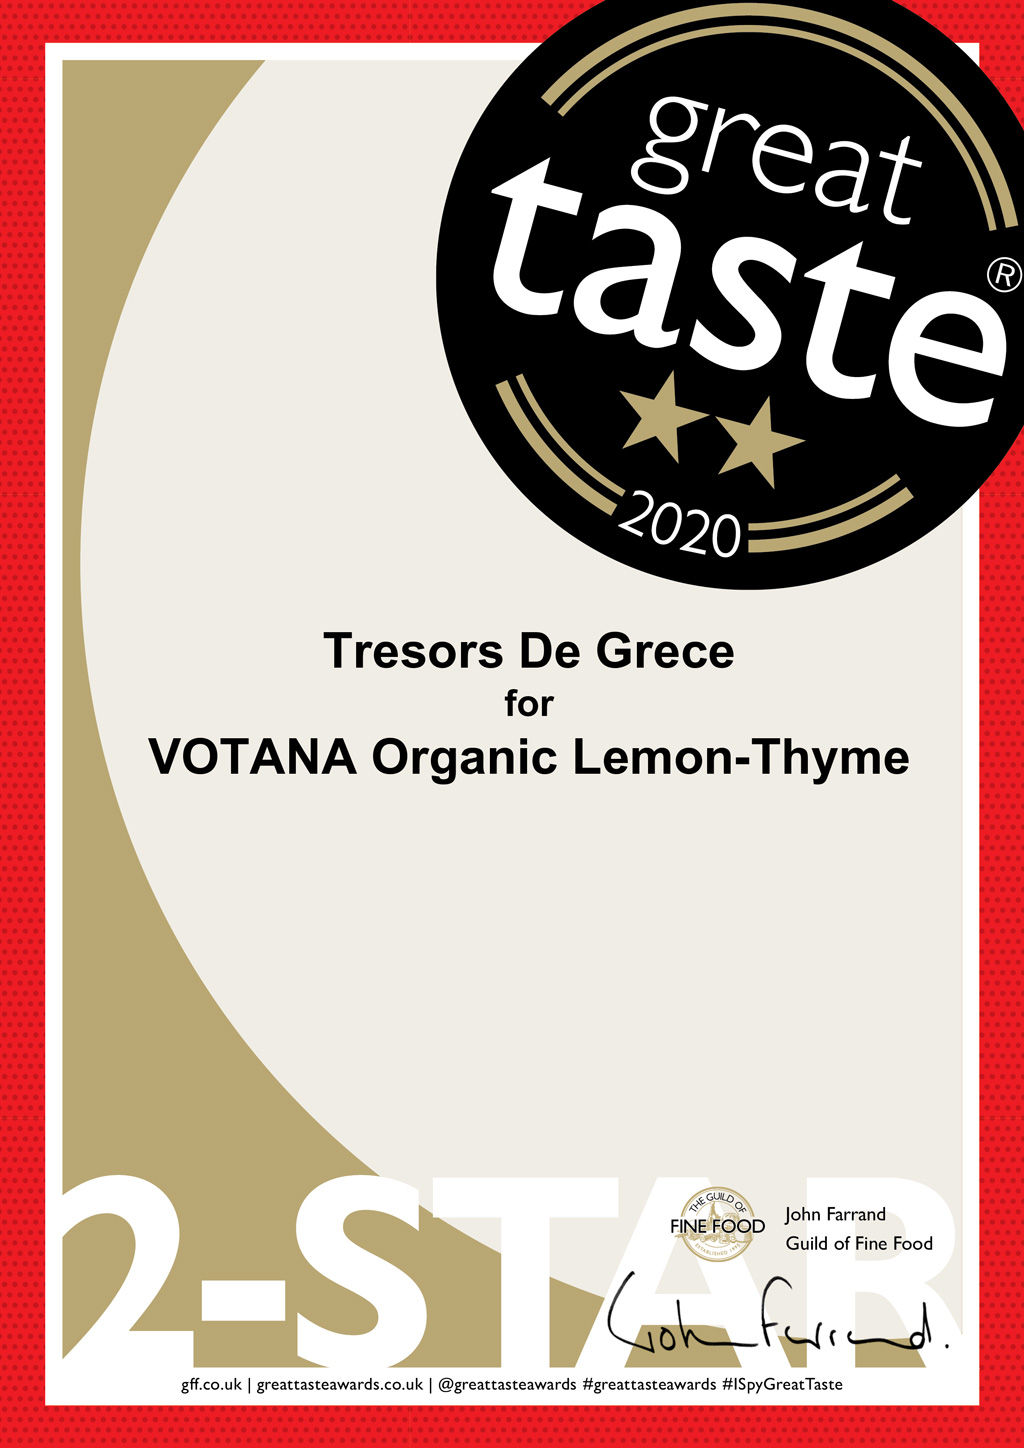 VOTANA Organic Lemon Thyme 2 stars Awards & Media